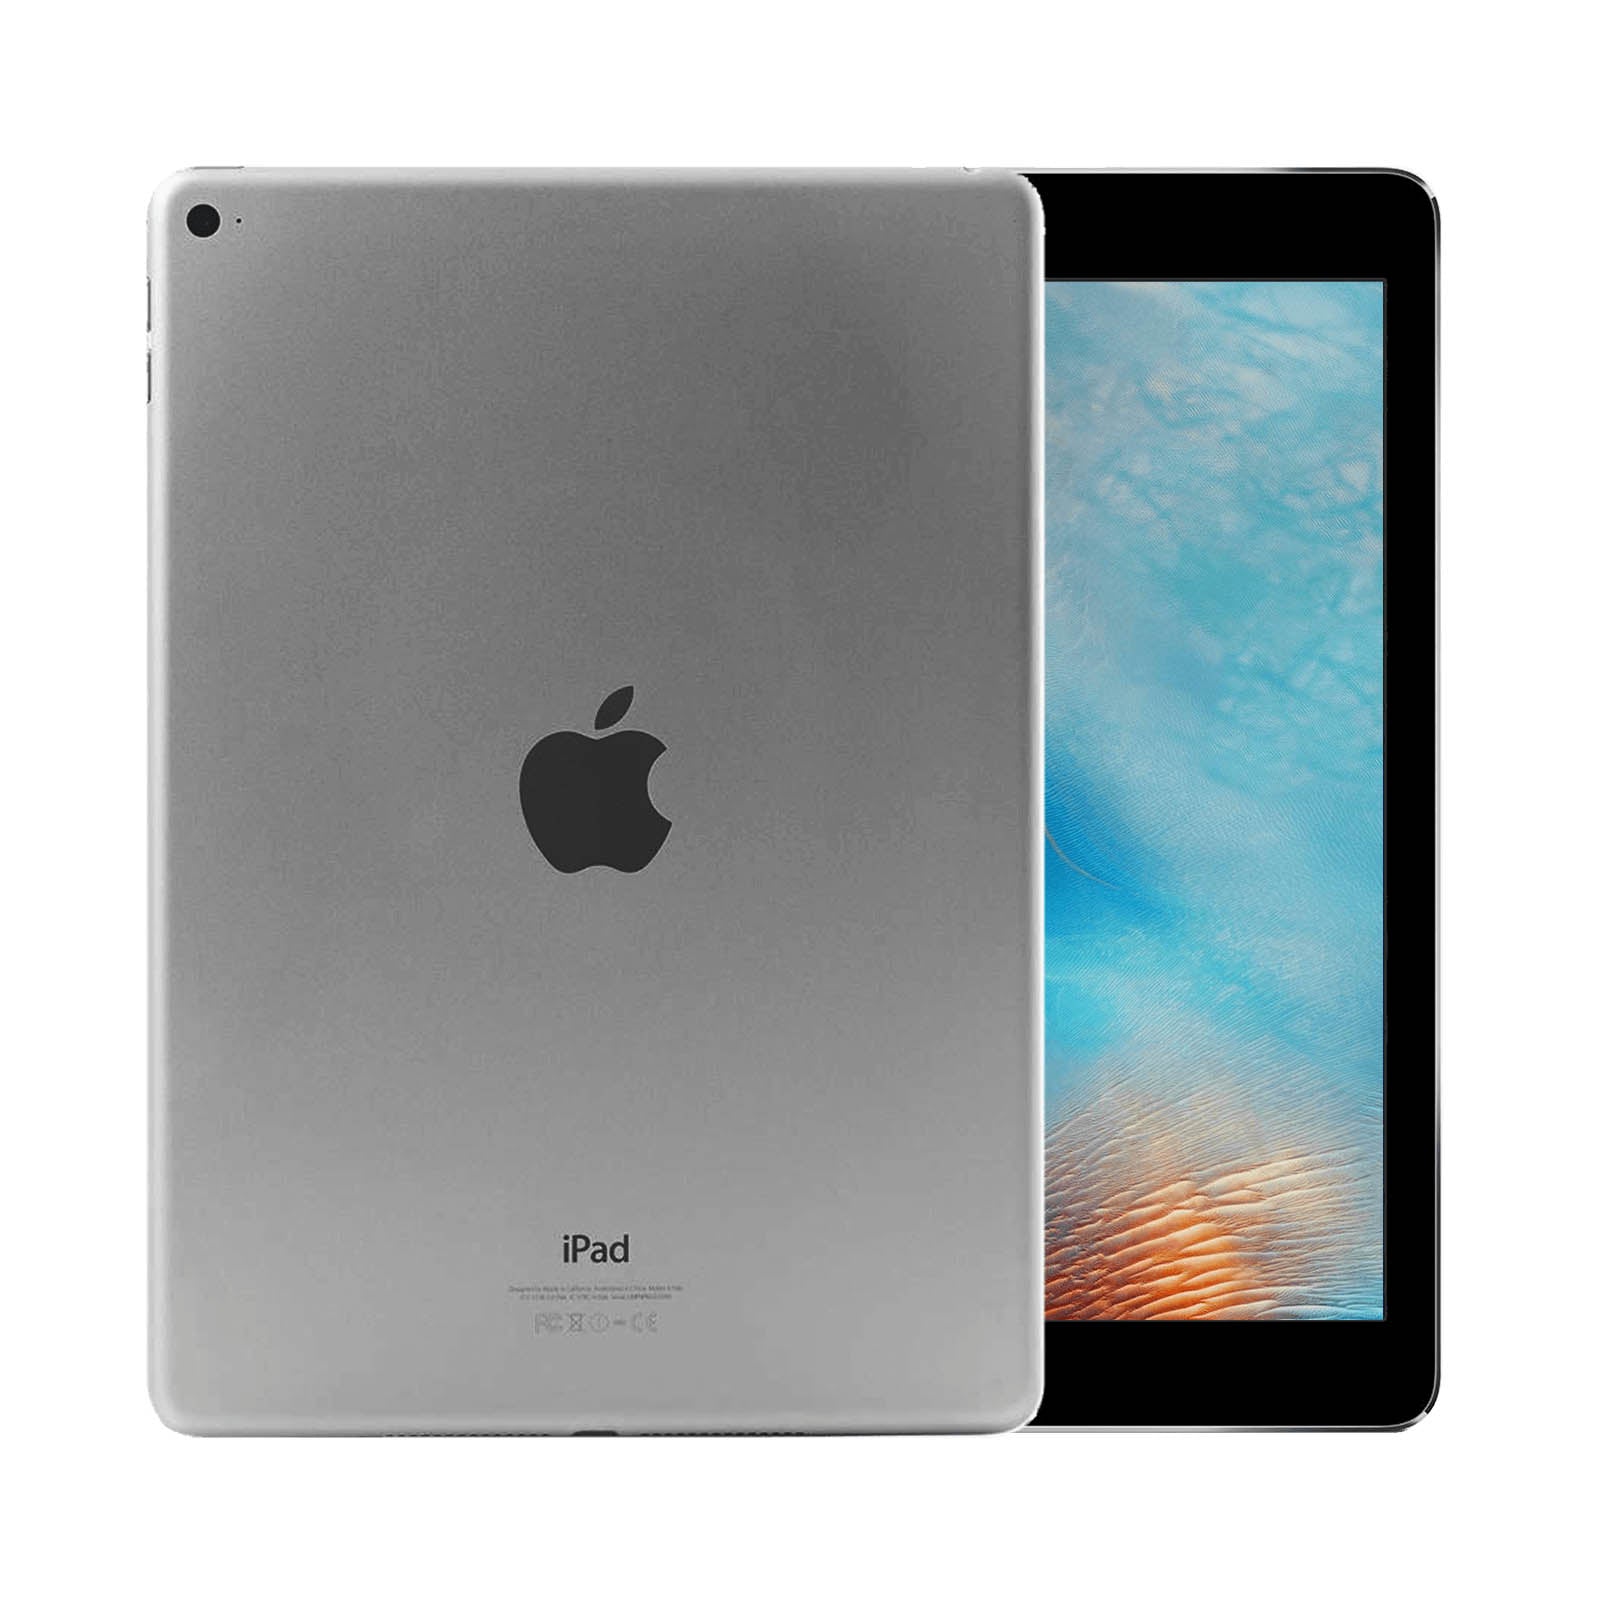 Apple iPad Air 2 16GB Space Grey Good - WiFi